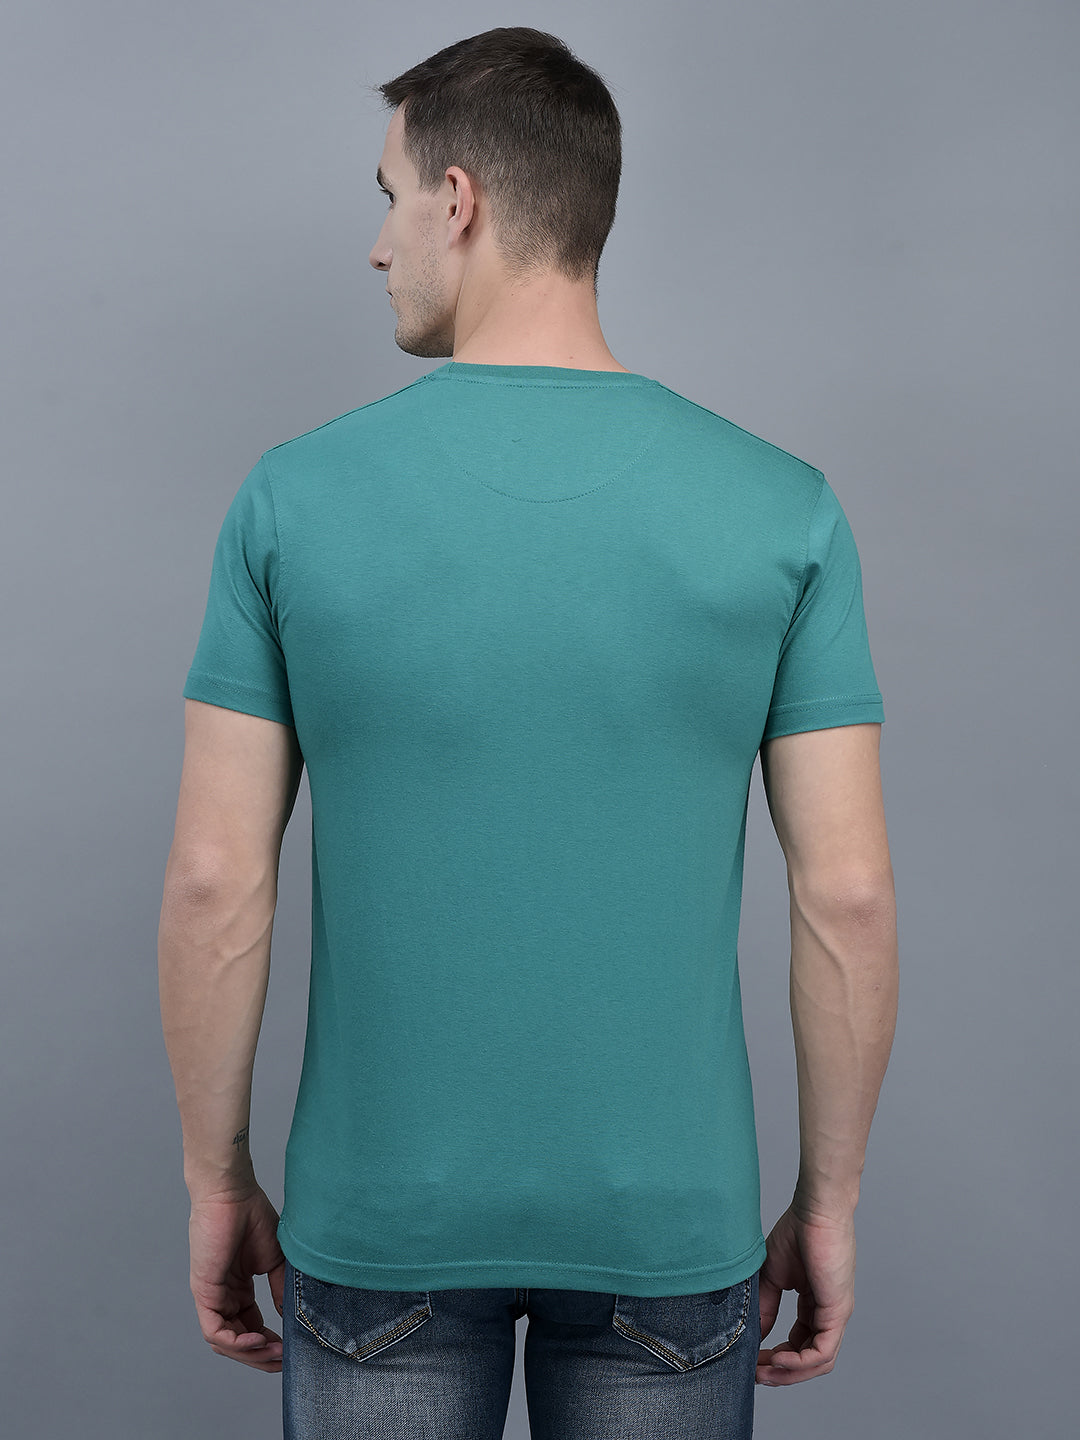 Cobb Green Printed Round Neck T-Shirt